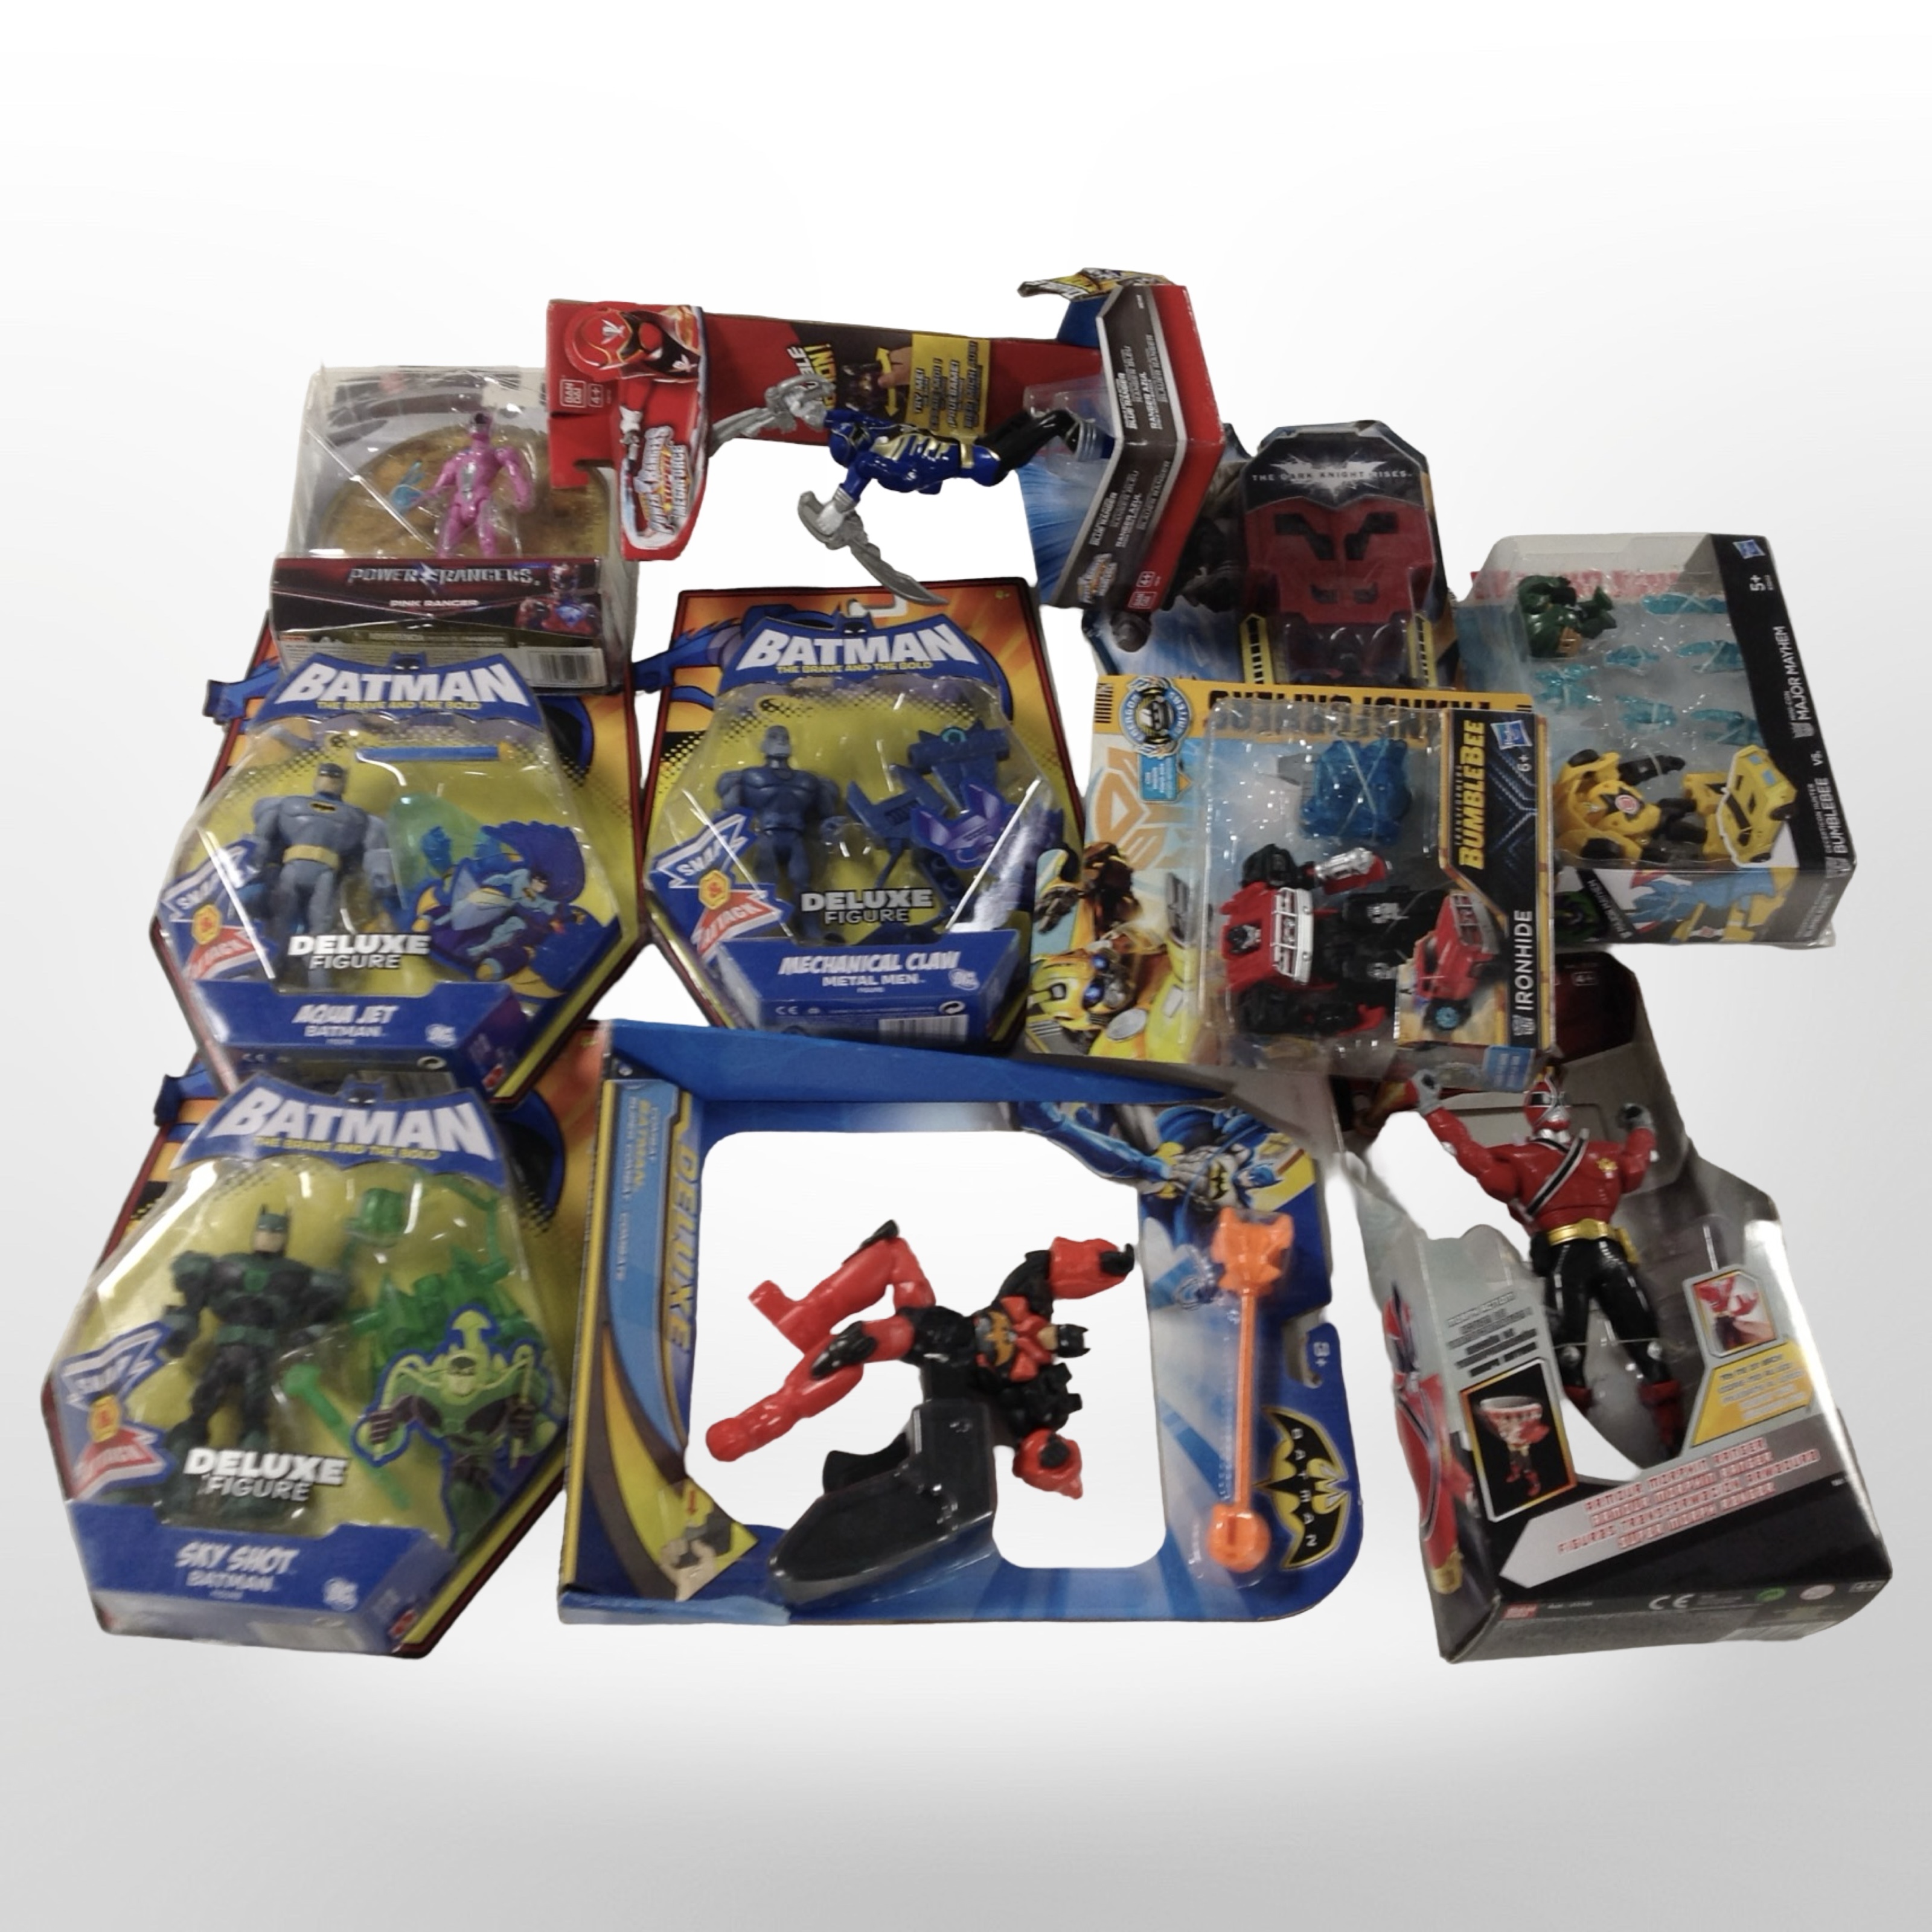 10 Hasbro, DC and Bandai figures including Batman, Transformers, Power Rangers, etc., boxed.